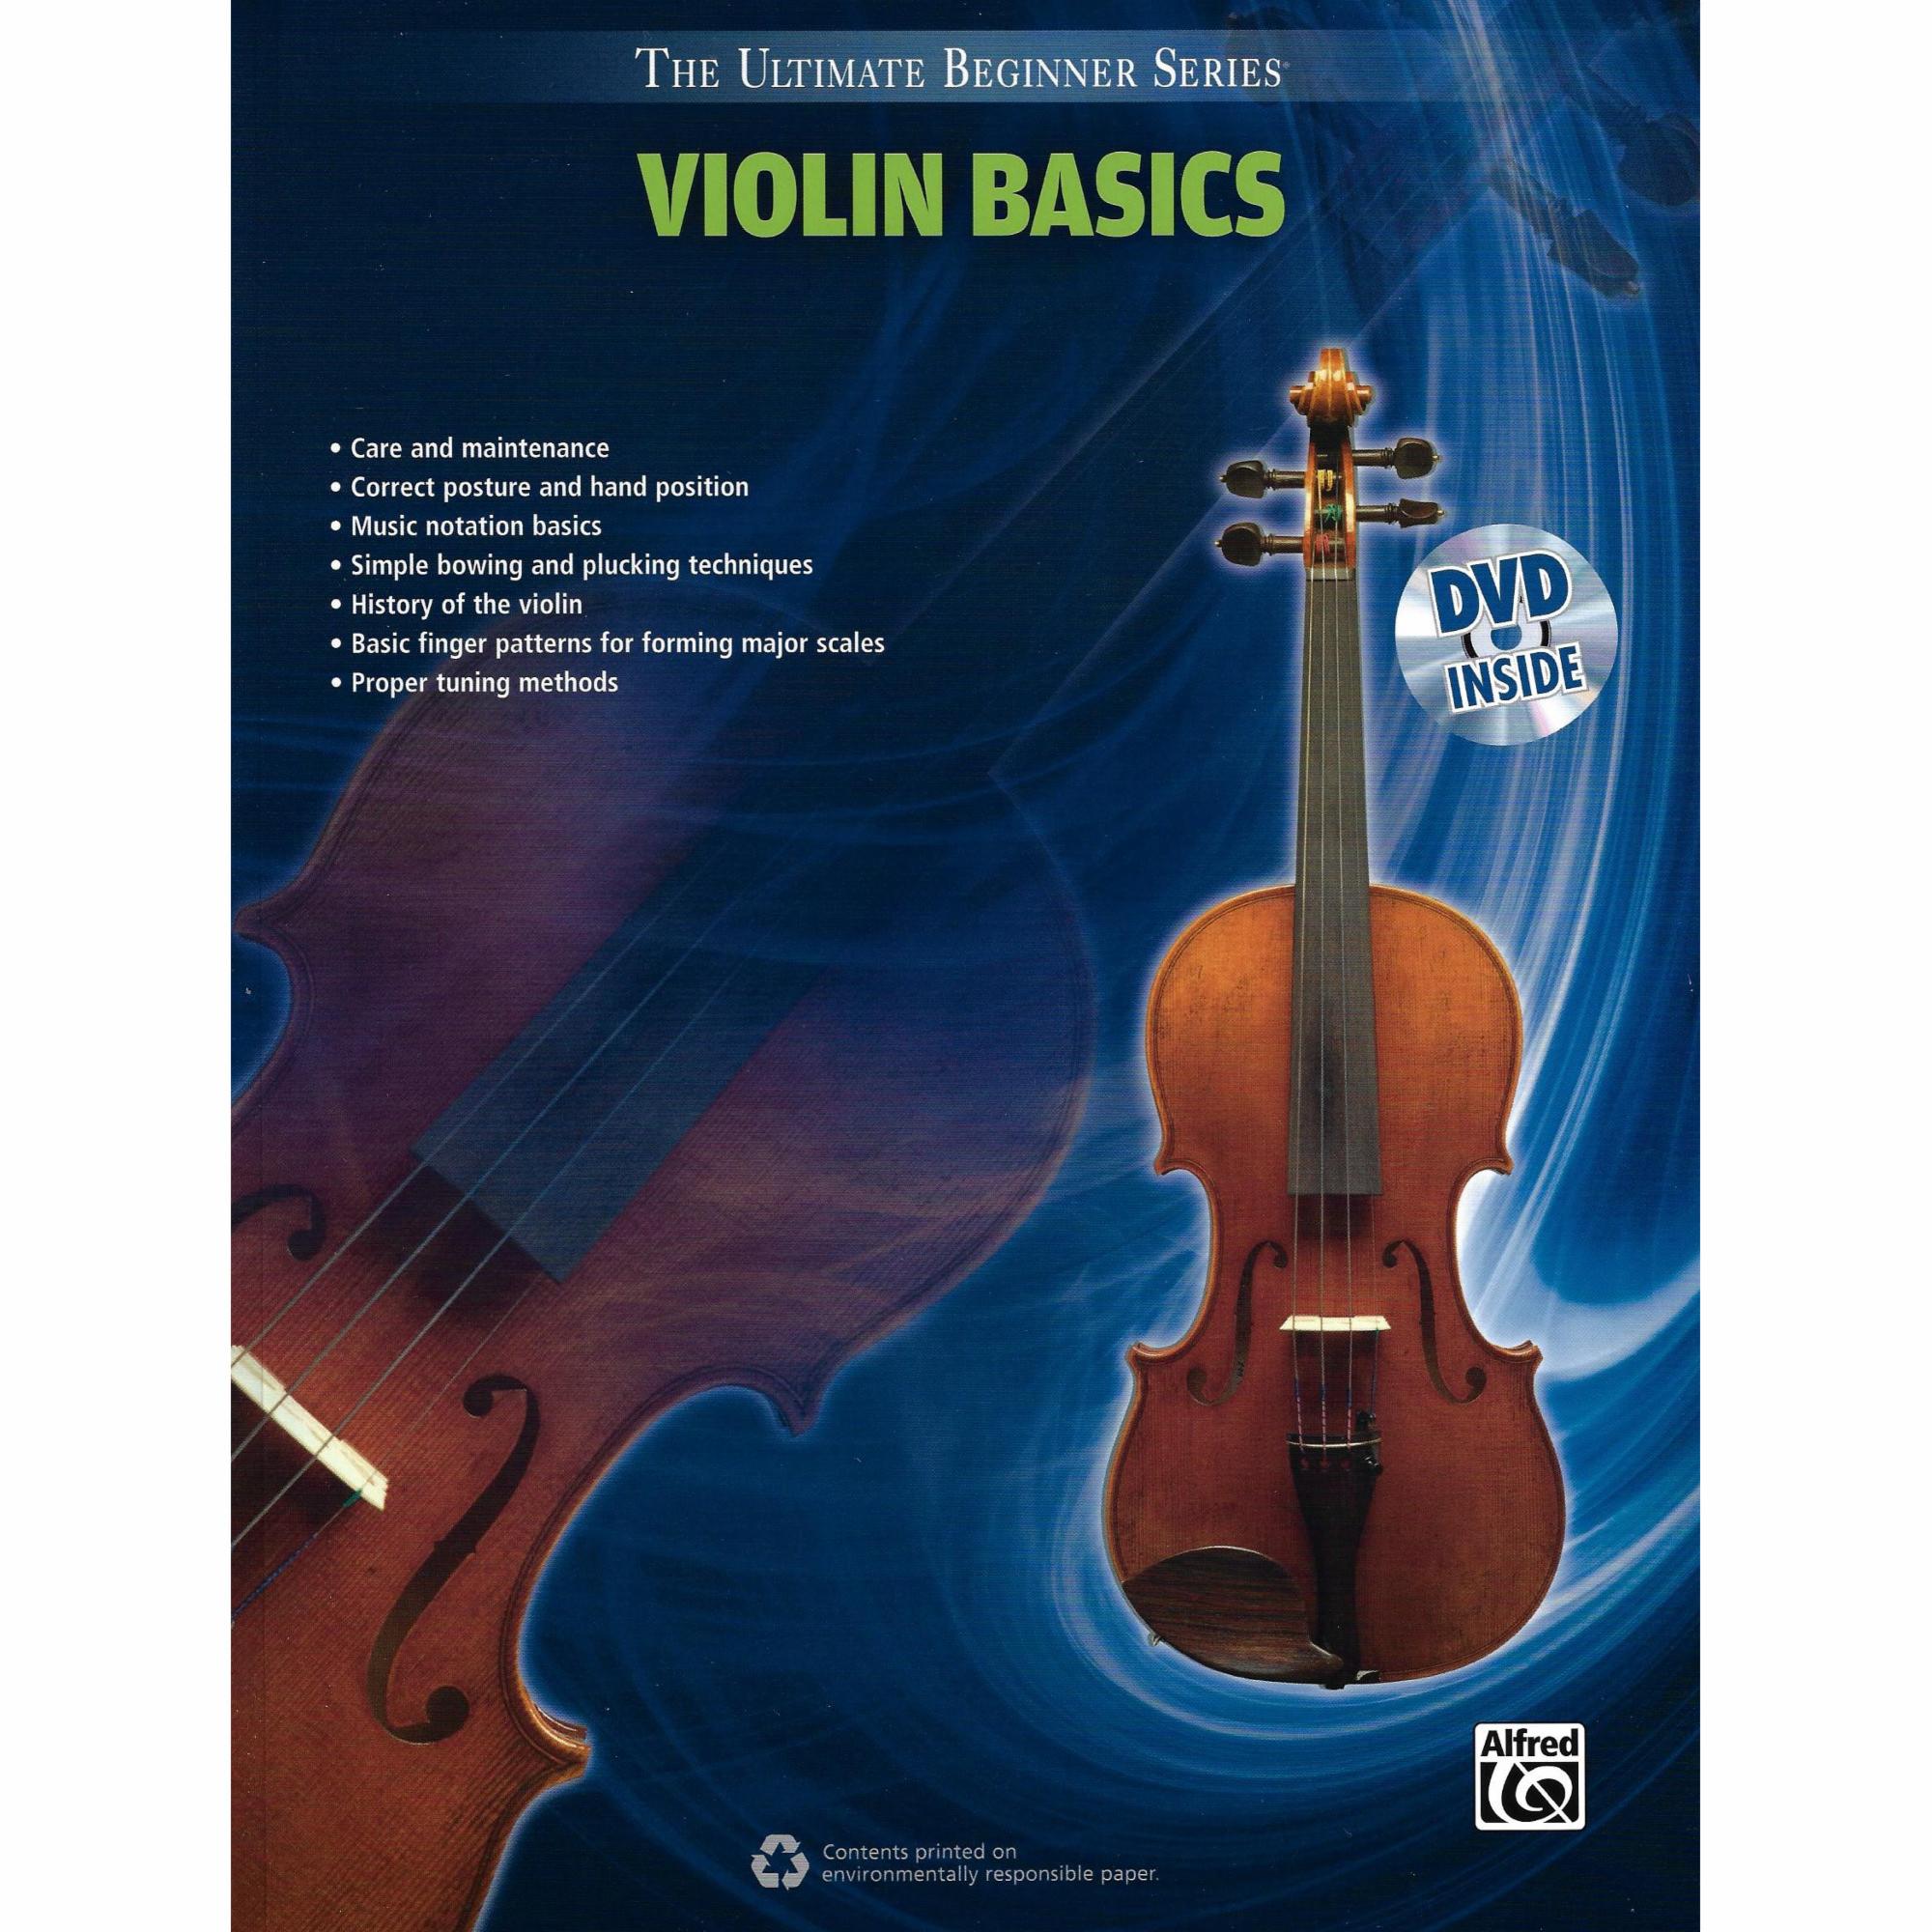 The Ultimate Beginner Series: Violin Basics